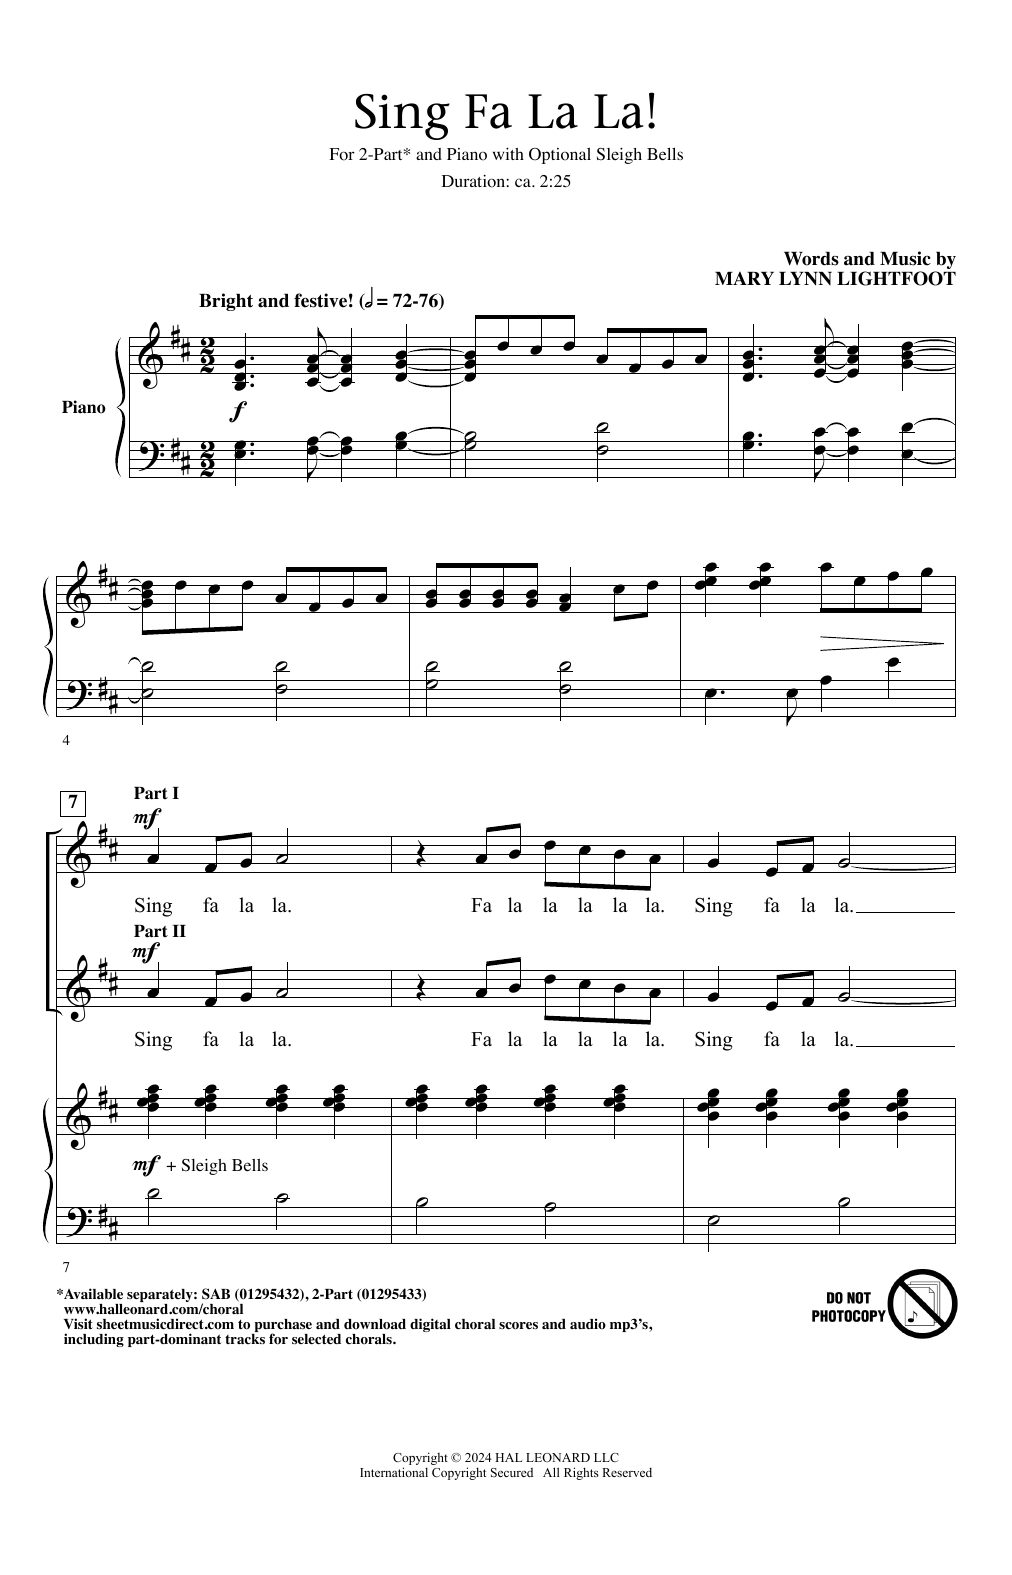 Mary Lynn Lightfoot Sing Fa La La! sheet music notes and chords arranged for 2-Part Choir